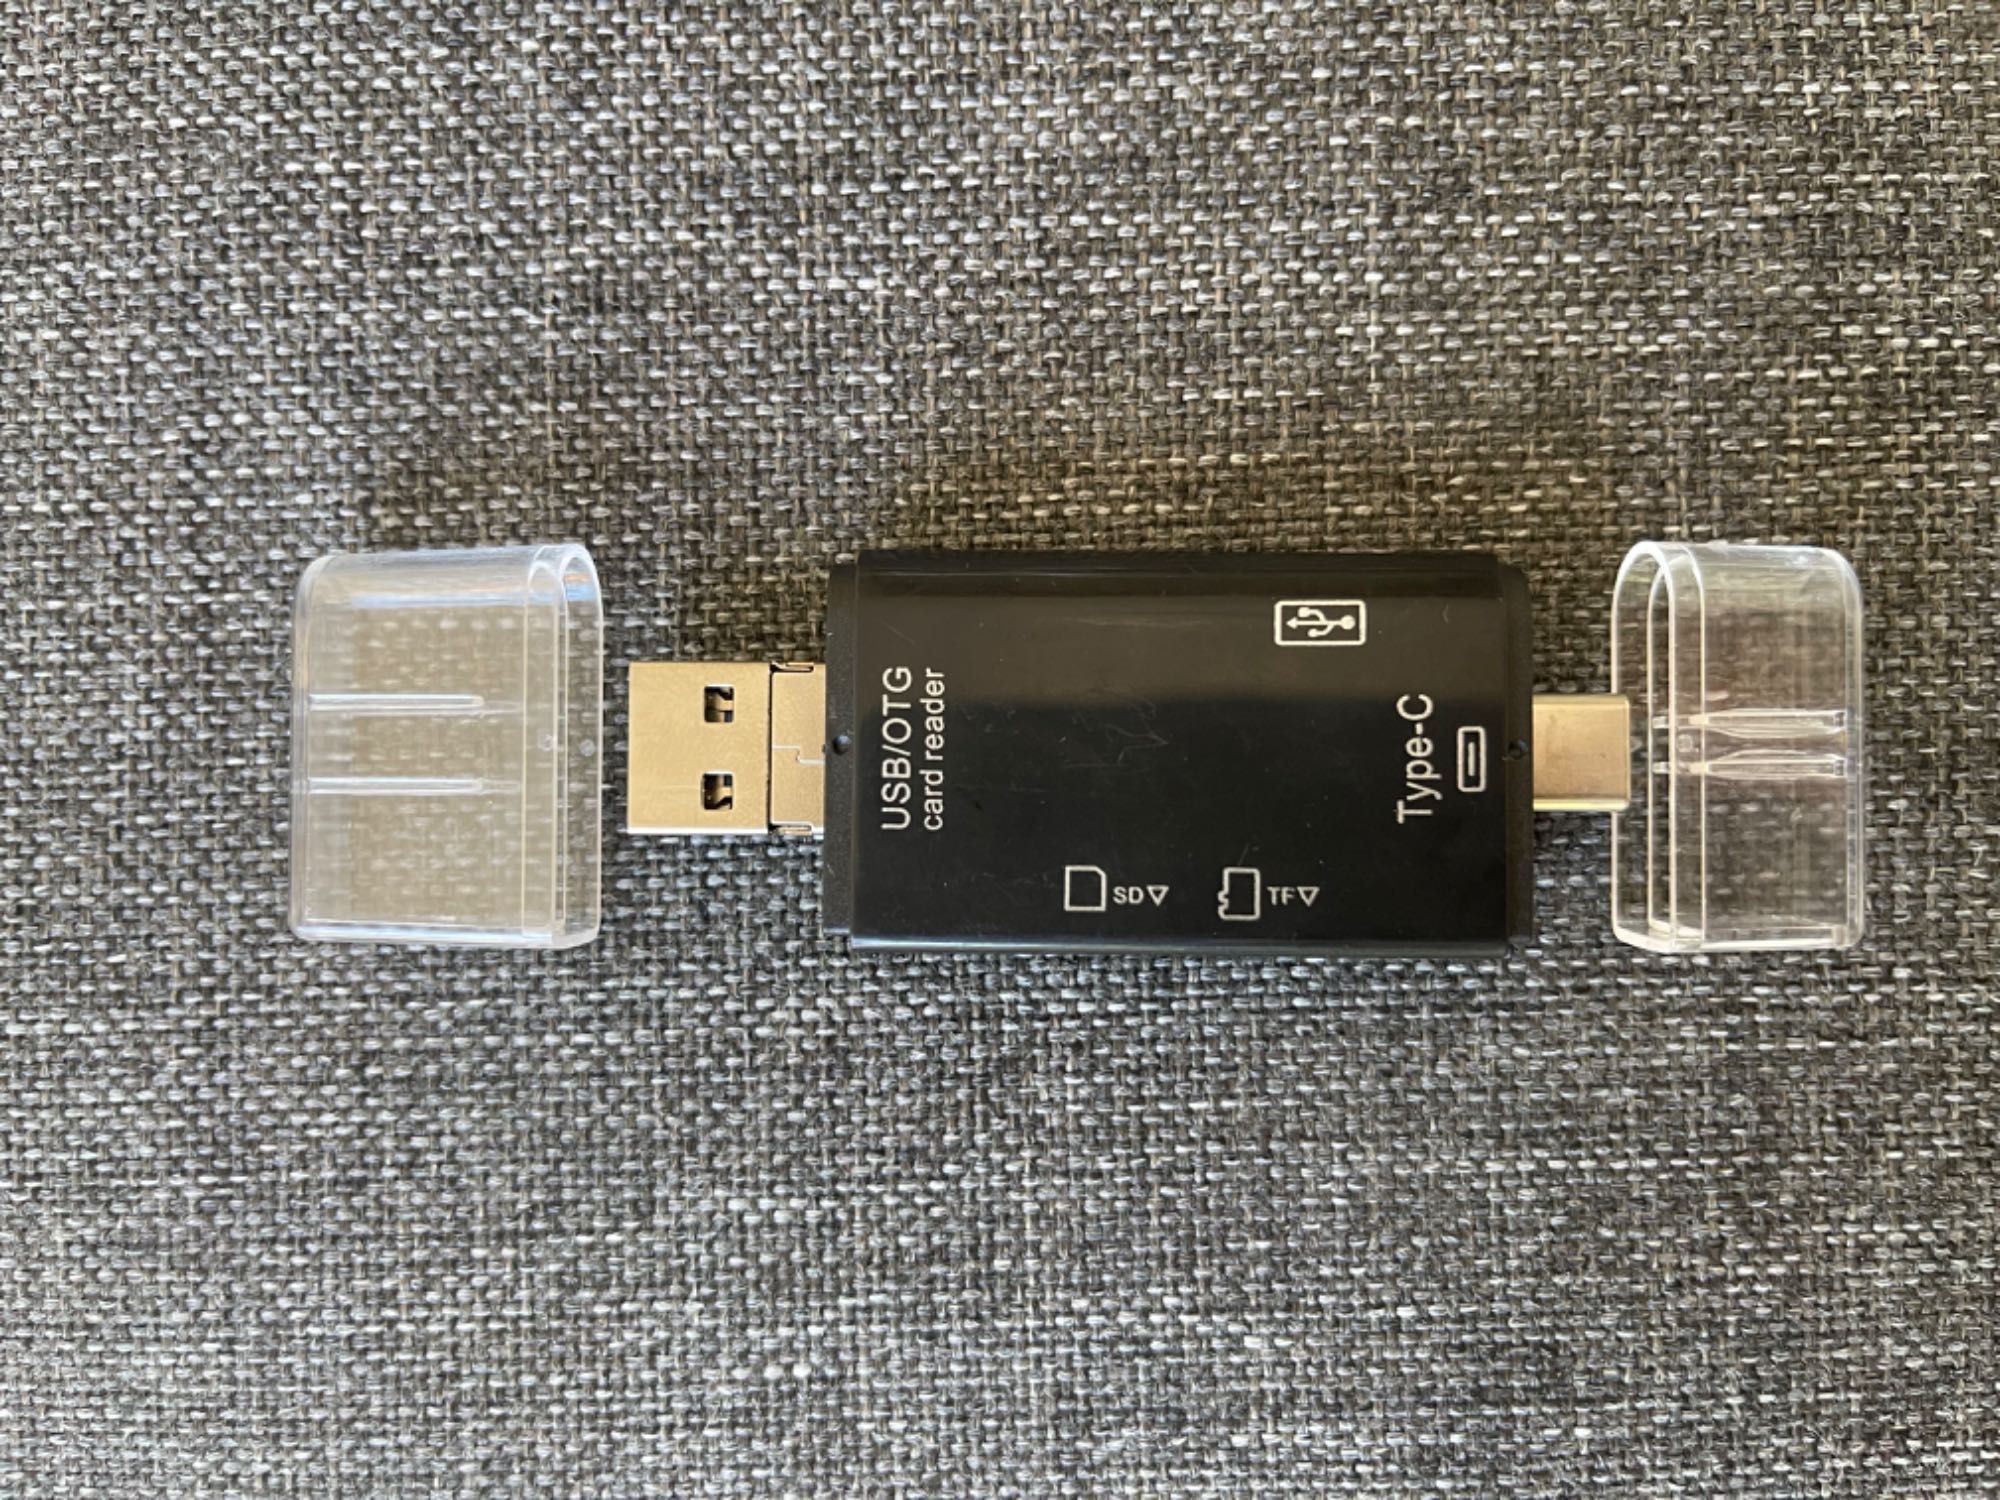 OTG, USB -Type C; Lightning- TFmicro(SD),OTG адаптеры 3 в 1; 6 в 1